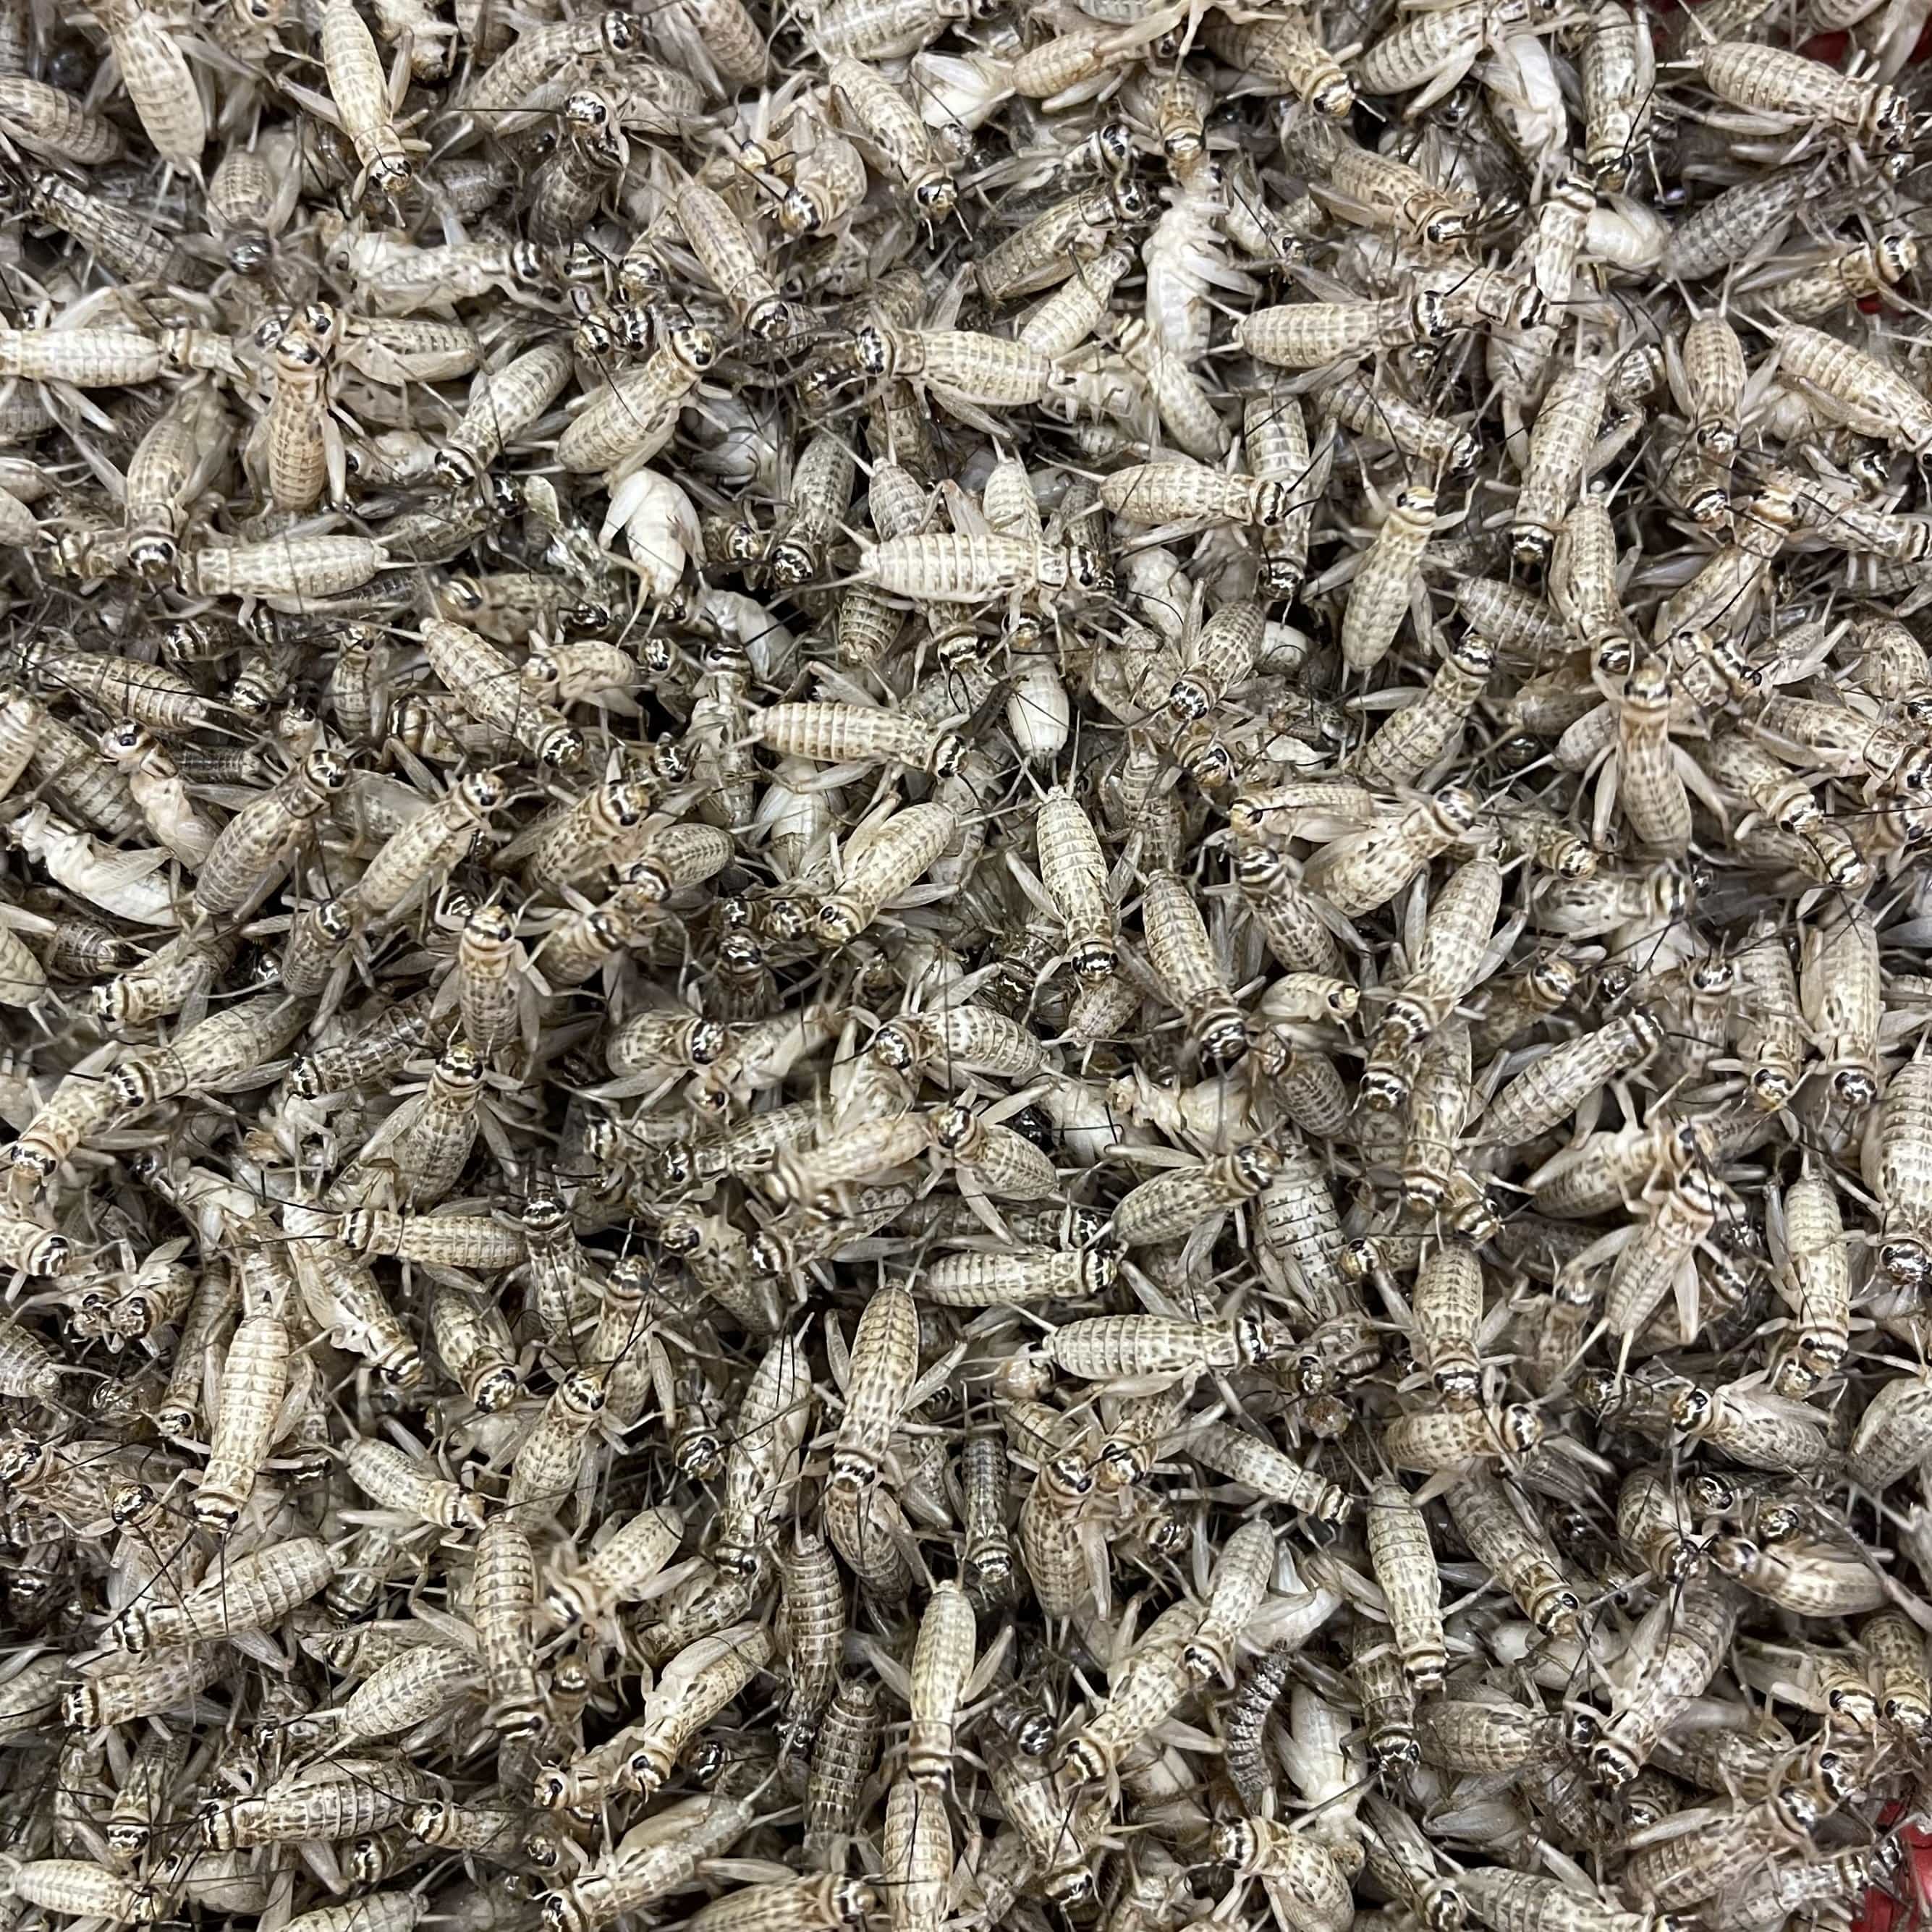 Pisces Enterprises Live Food Bulk Bulk Medium Crickets (1500 Crickets)